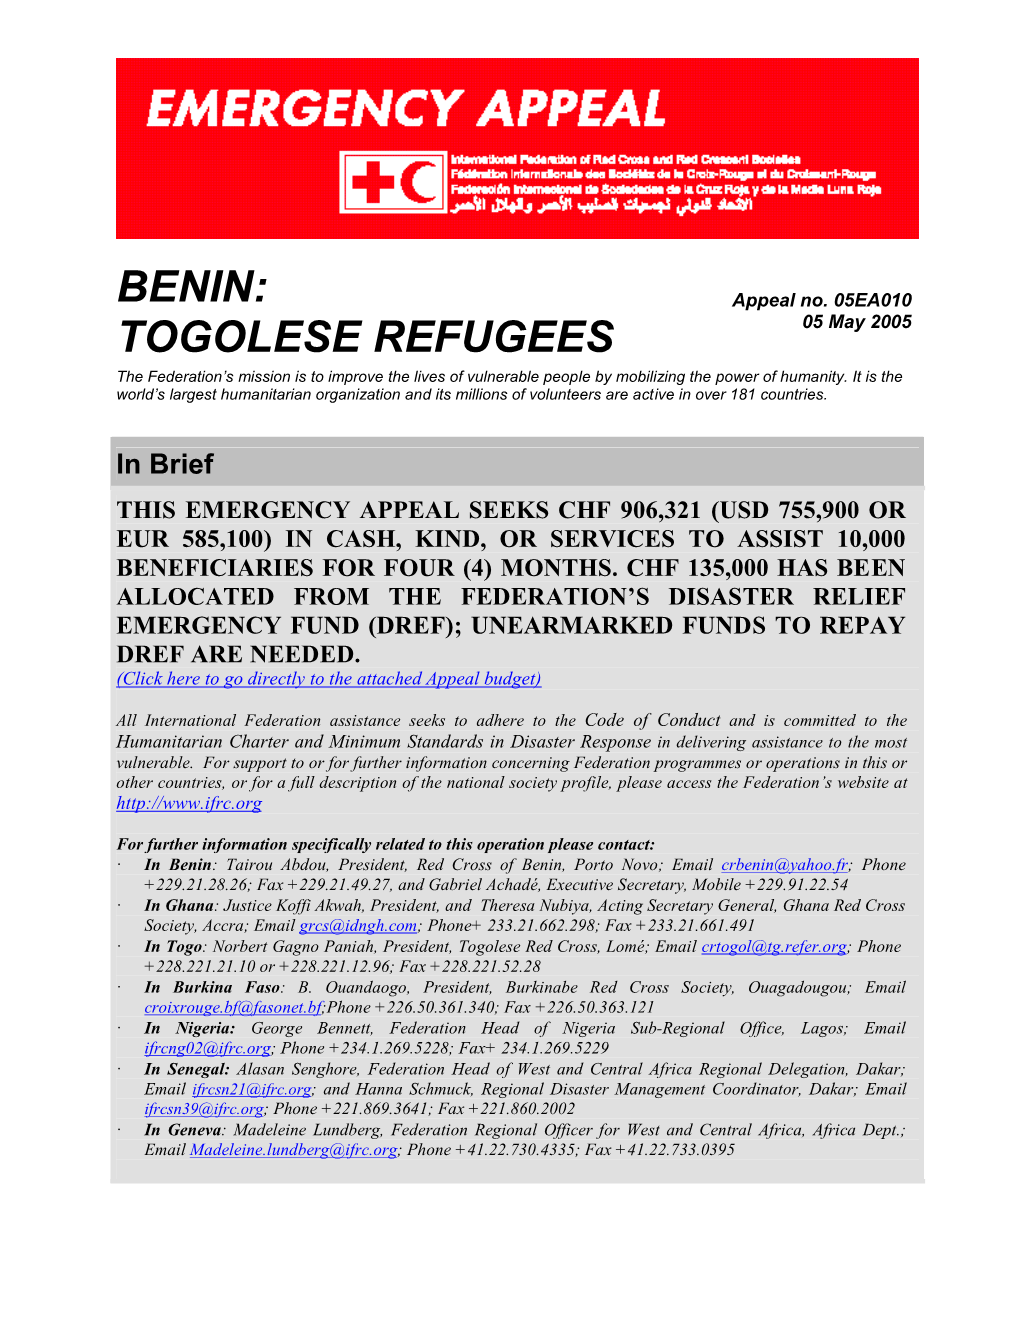 Benin: Togolese Refugees; Emergency Appeal No